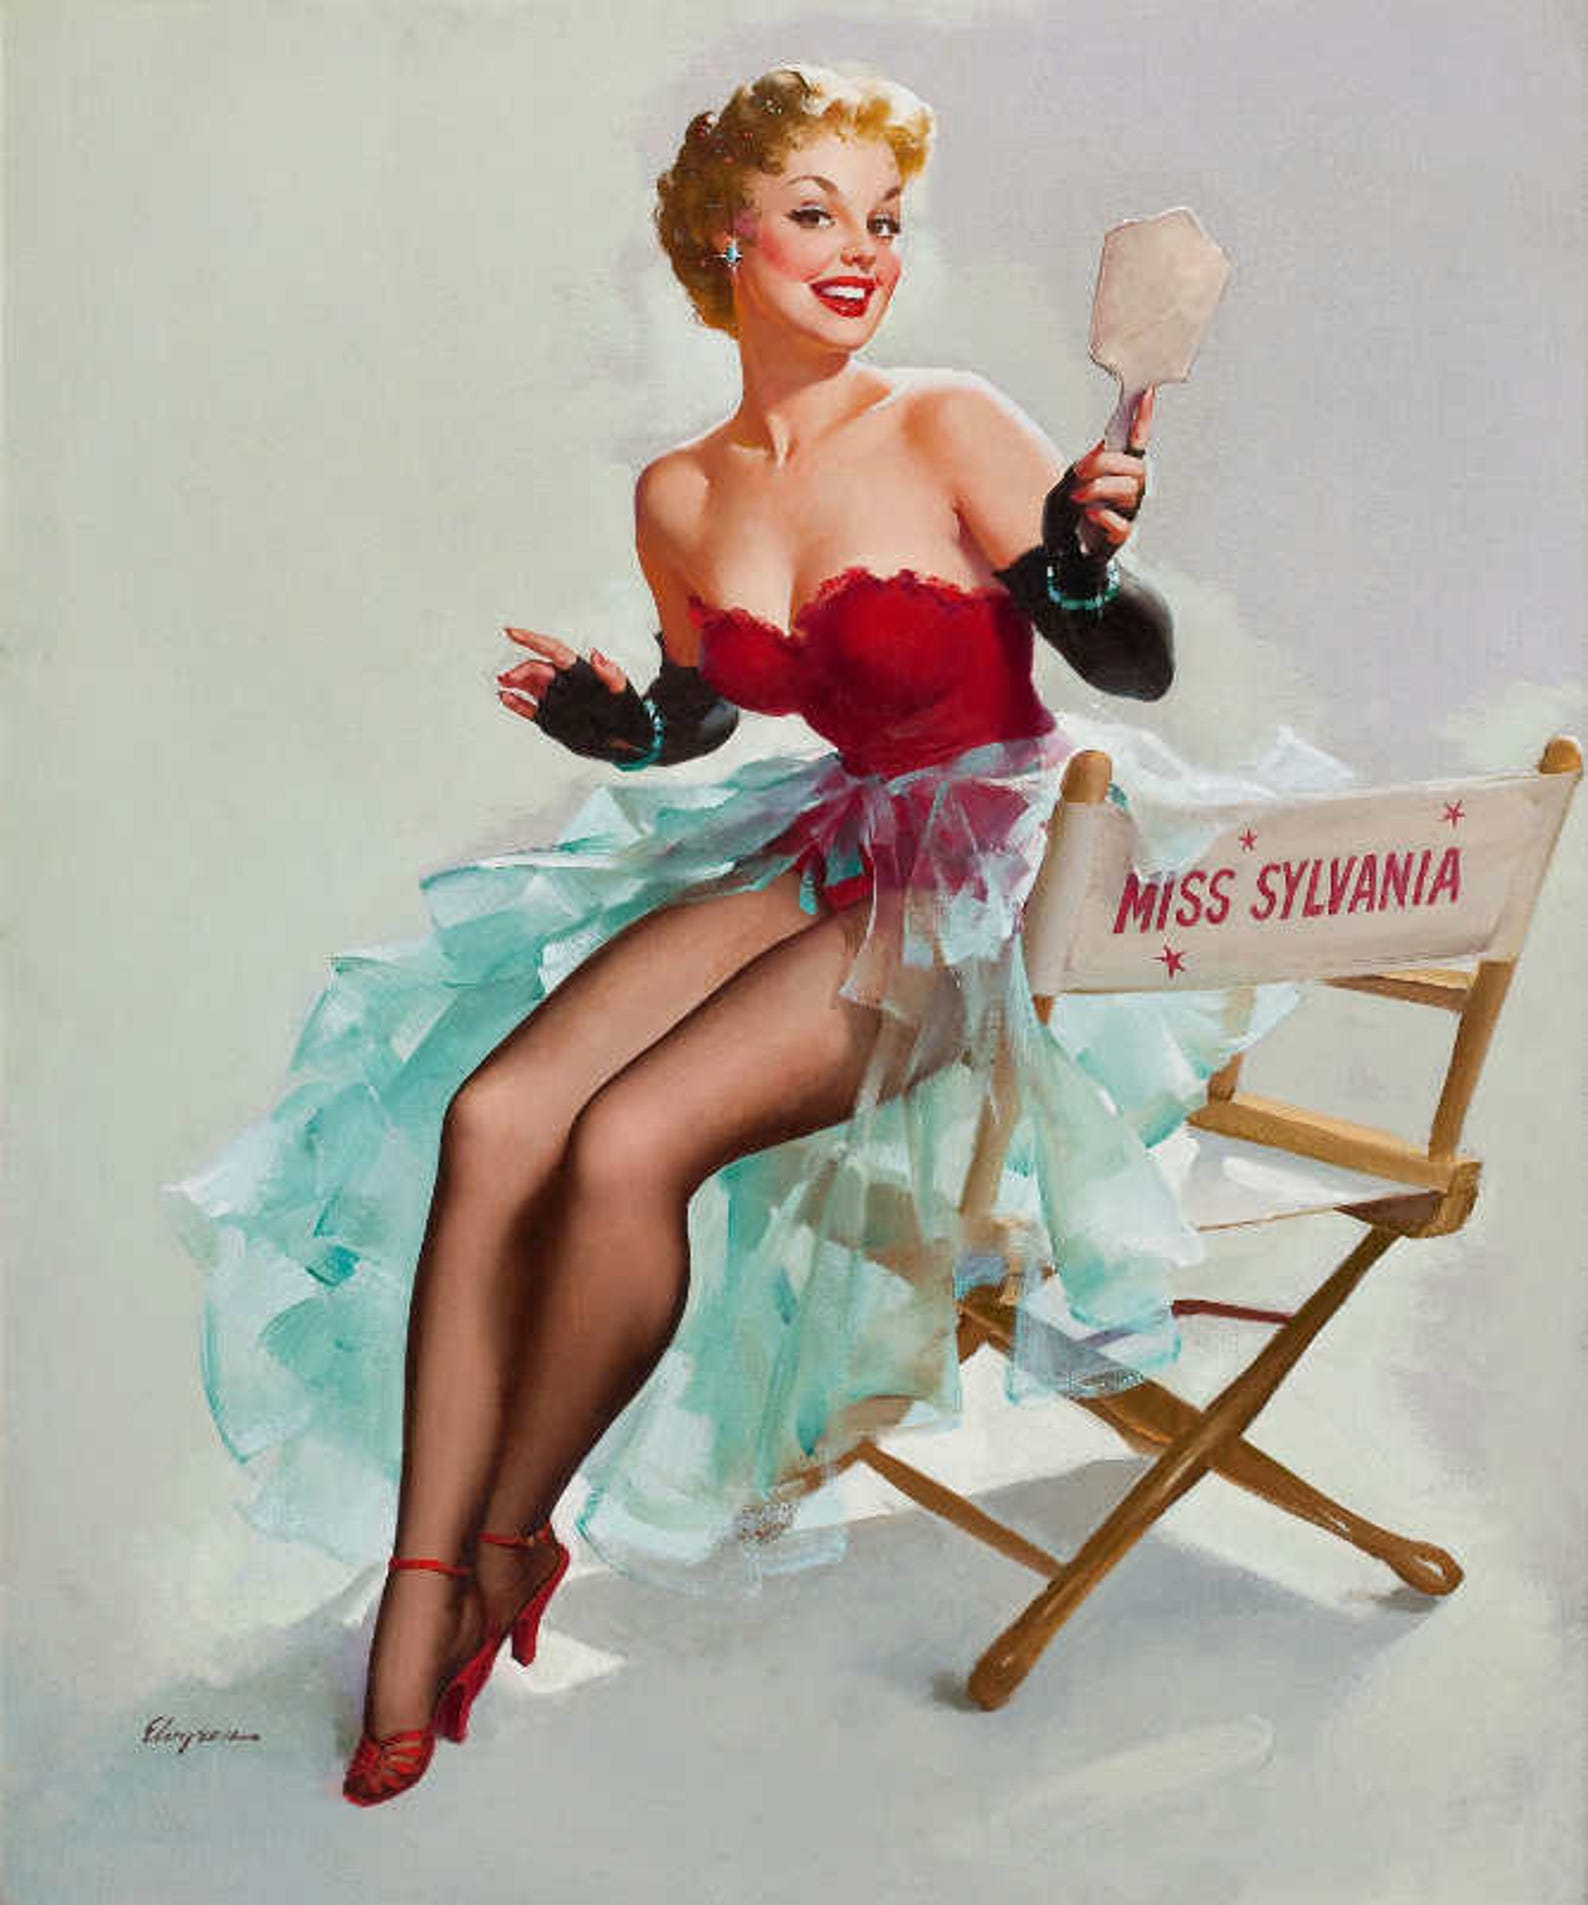 Miss Sylvania 1955 Gil Elvgren Vintage Pin Up Art Poster Etsy